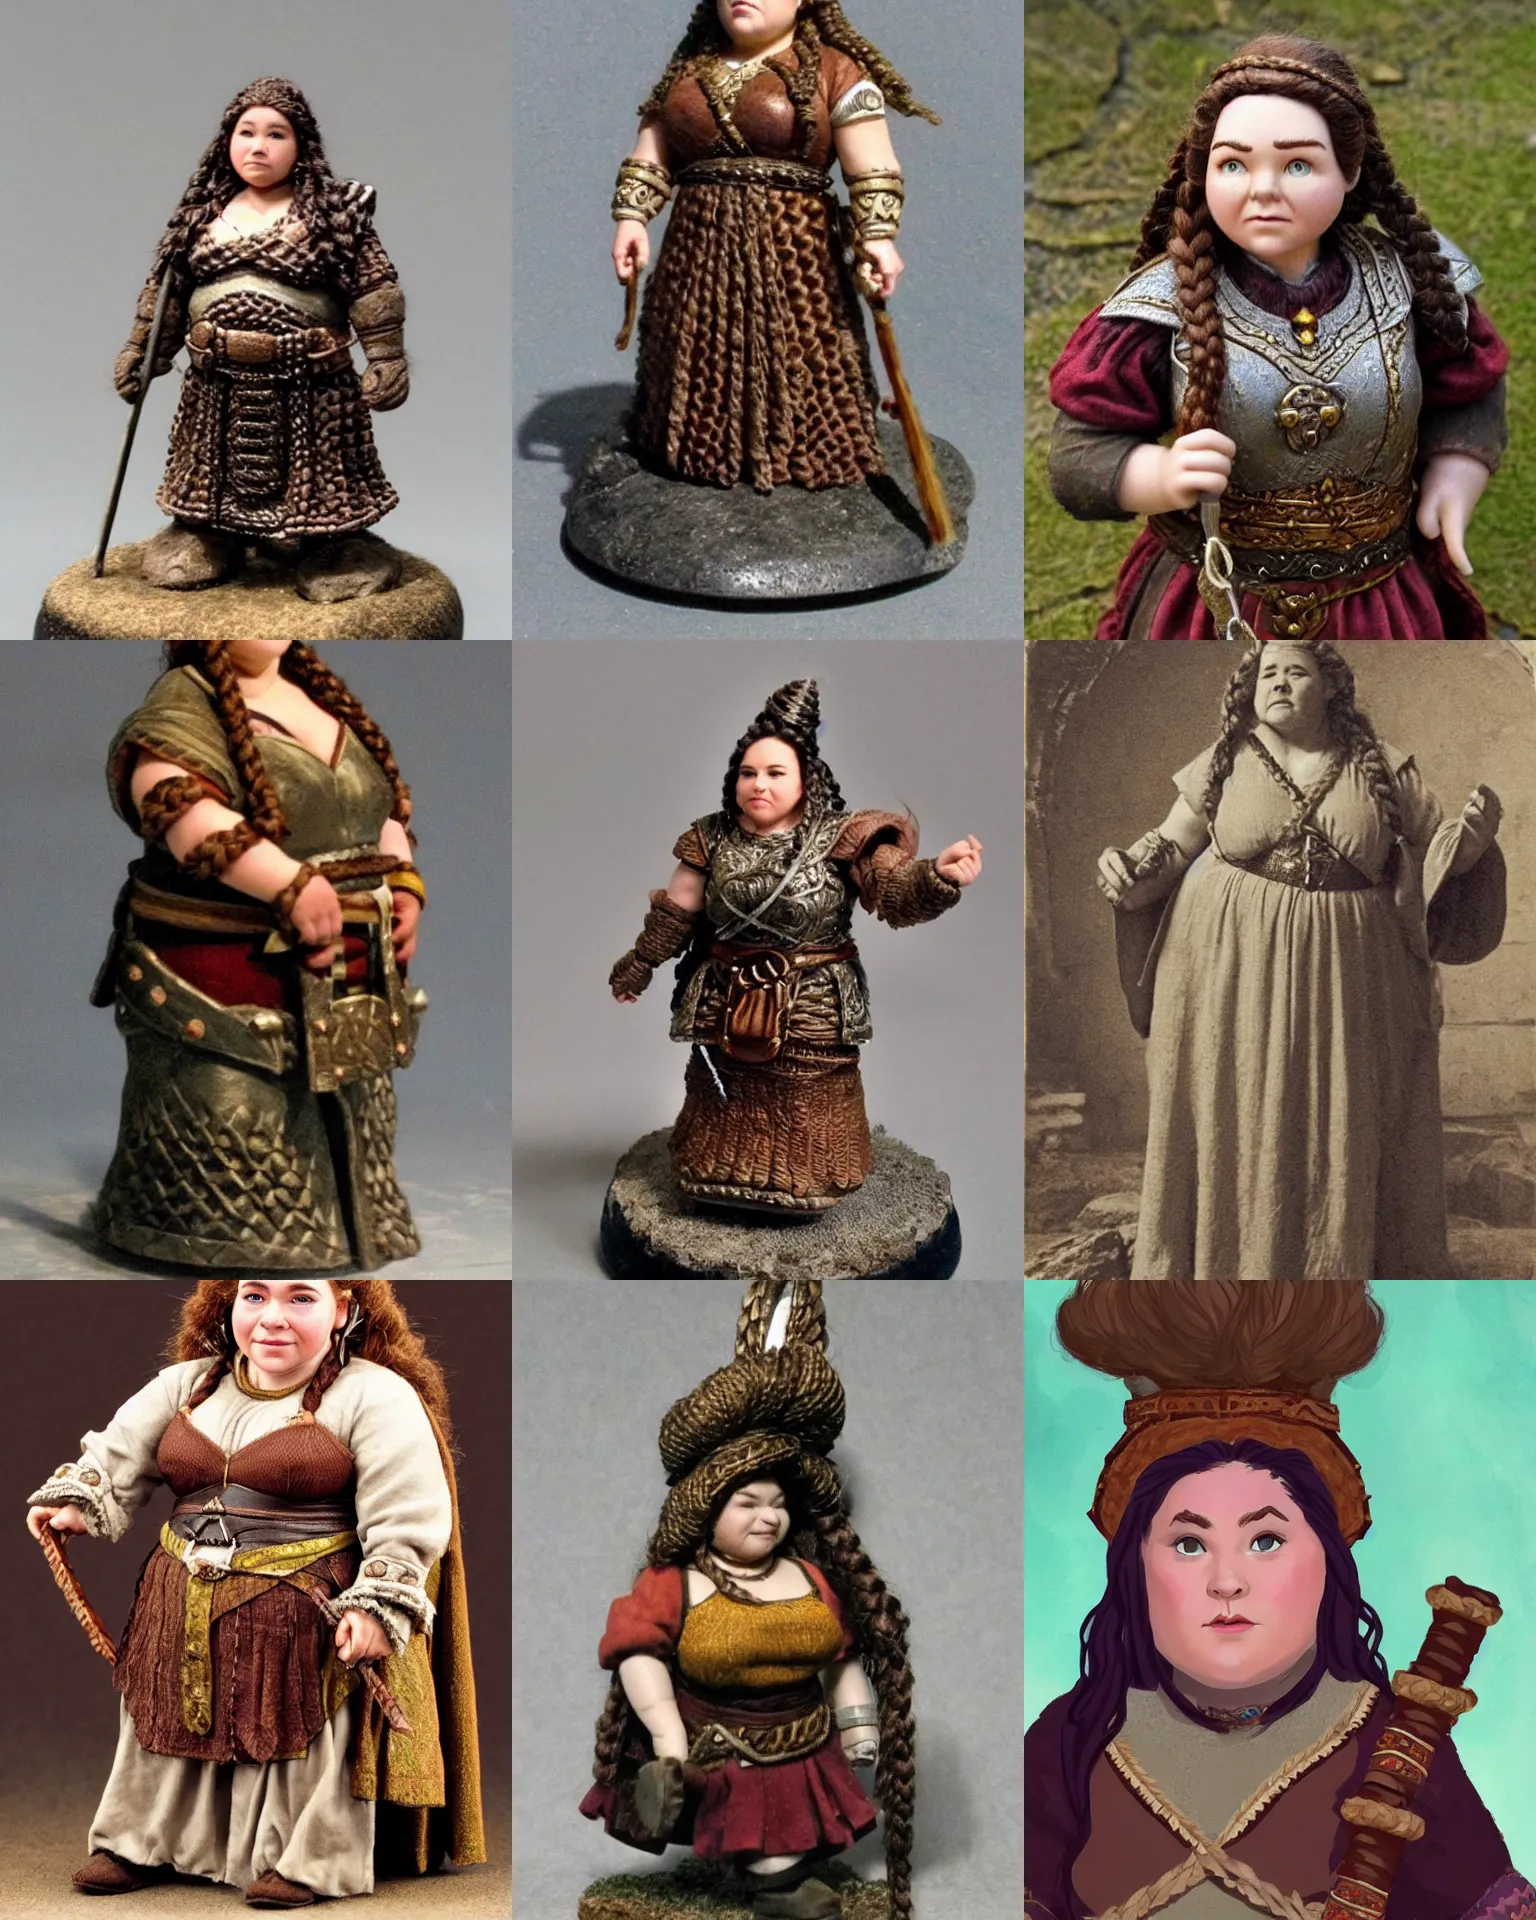 Prompt: female dwarven noblewoman, chubby short stature, braided intricate hair, byedward hopper